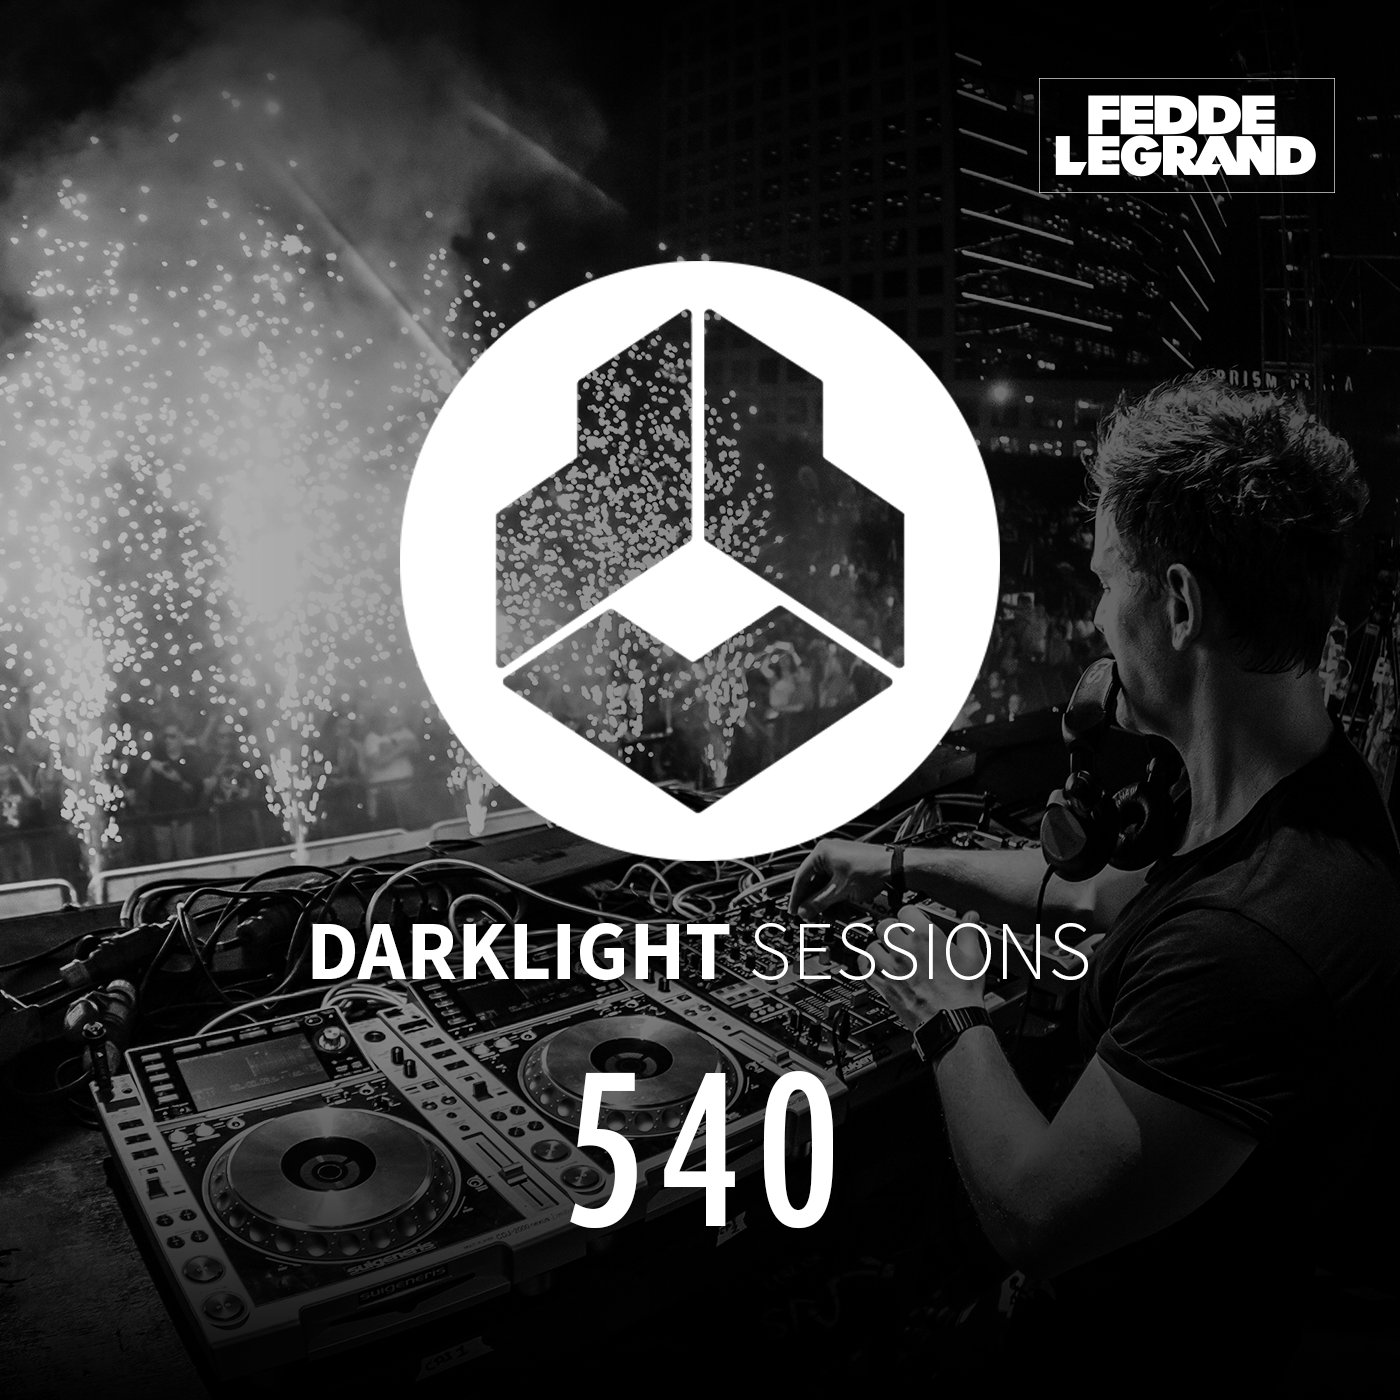 Darklight Sessions 540